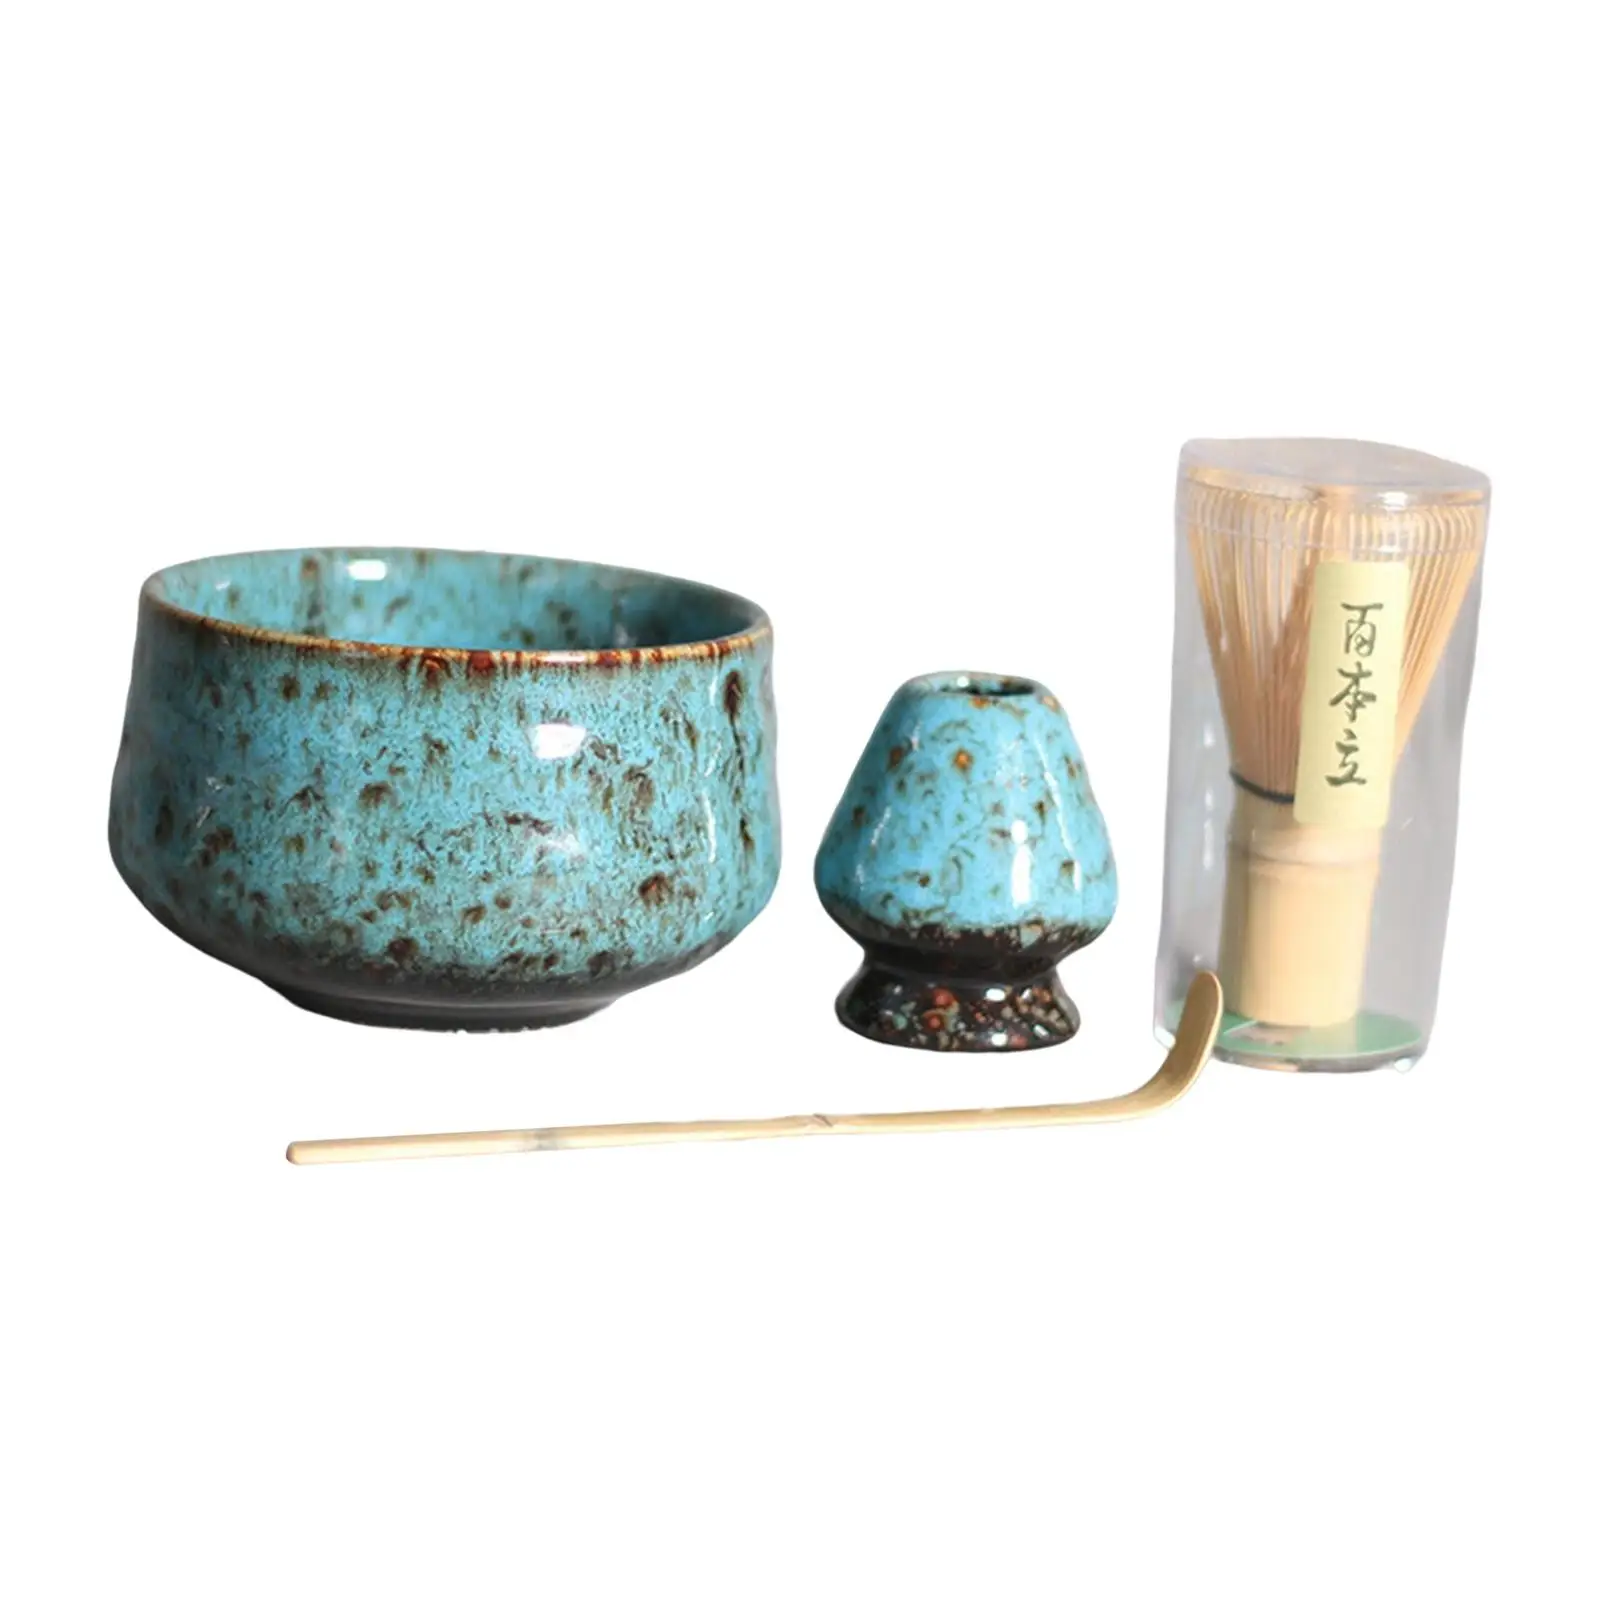 4x Matcha Set Traditional , Matcha Bowl, Whisk Holder, Traditional Japanese Tea Ceremony for Tea Room